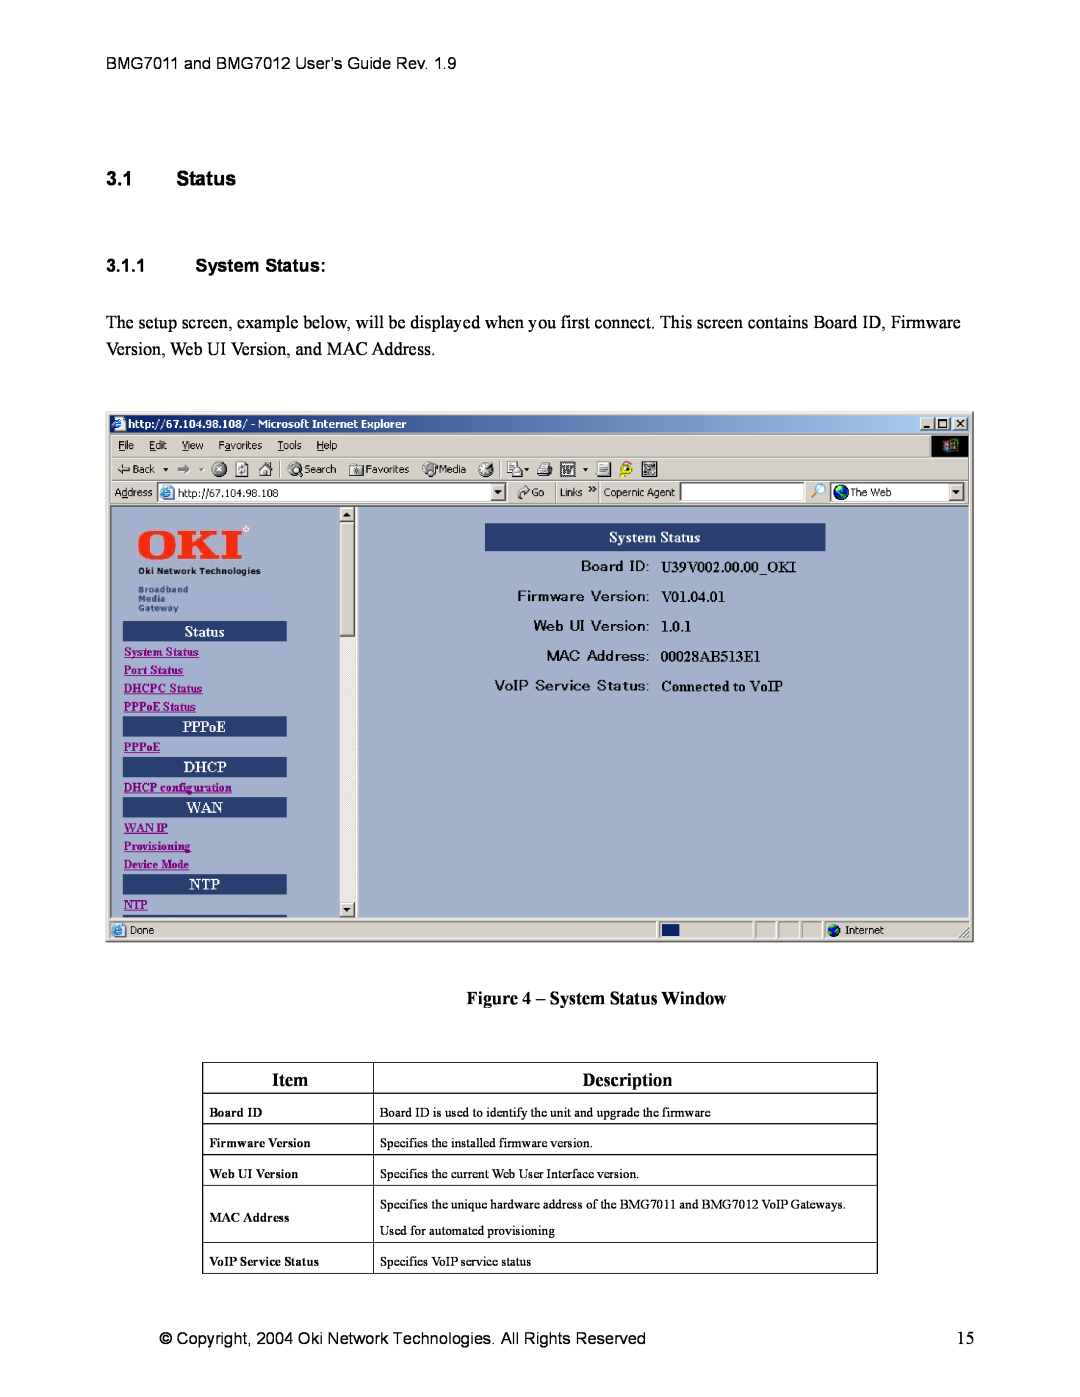 Oki BMG7011, BMG7012 manual 3.1Status, 3.1.1System Status, System Status Window, Description 